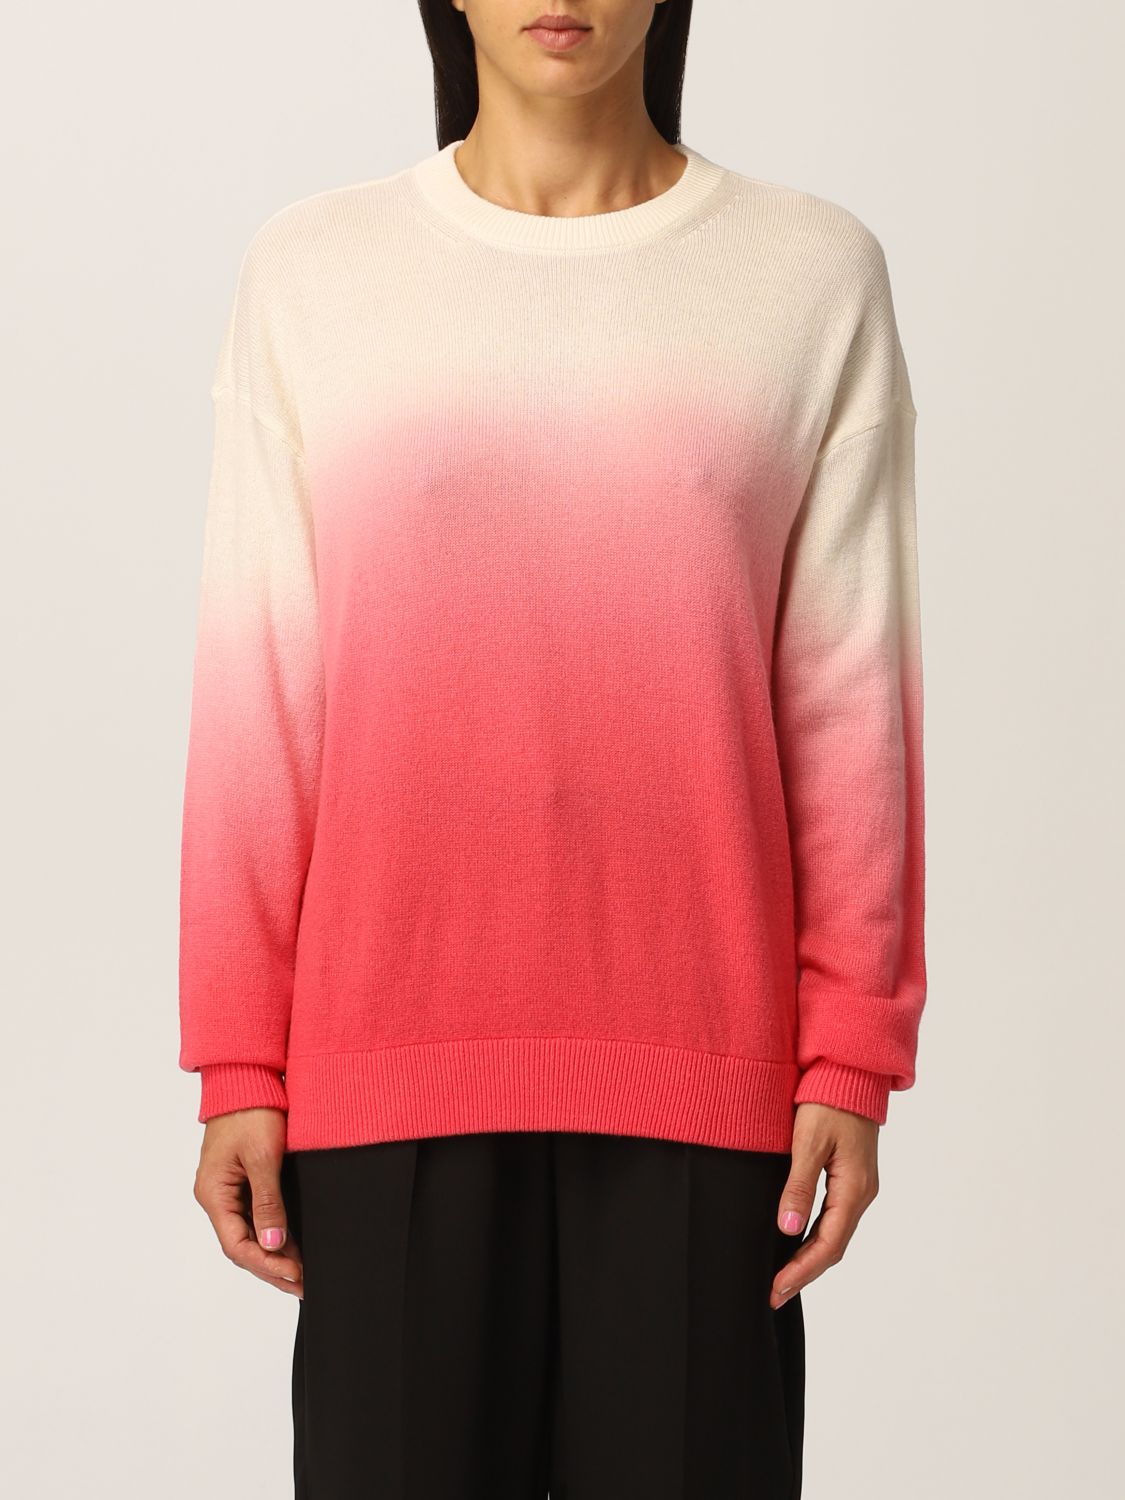 MICHAEL MICHAEL KORS: cashmere sweater | Sweater Michael Michael Kors Women Pink Sweater Kors MU1601Y2FE GIGLIO.COM